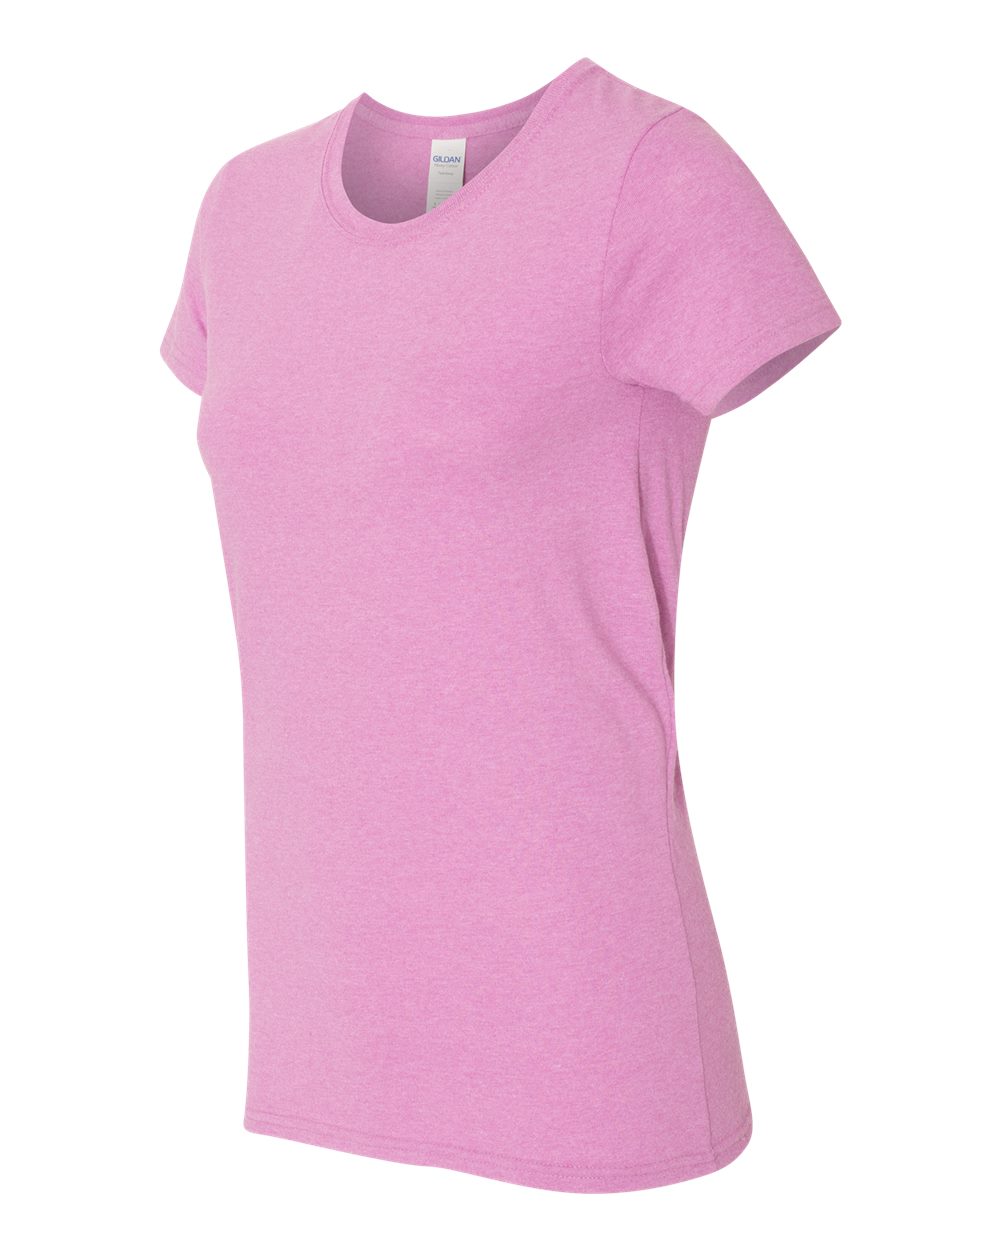 T-Shirt - Heavy Cotton Women's Short Sleeve